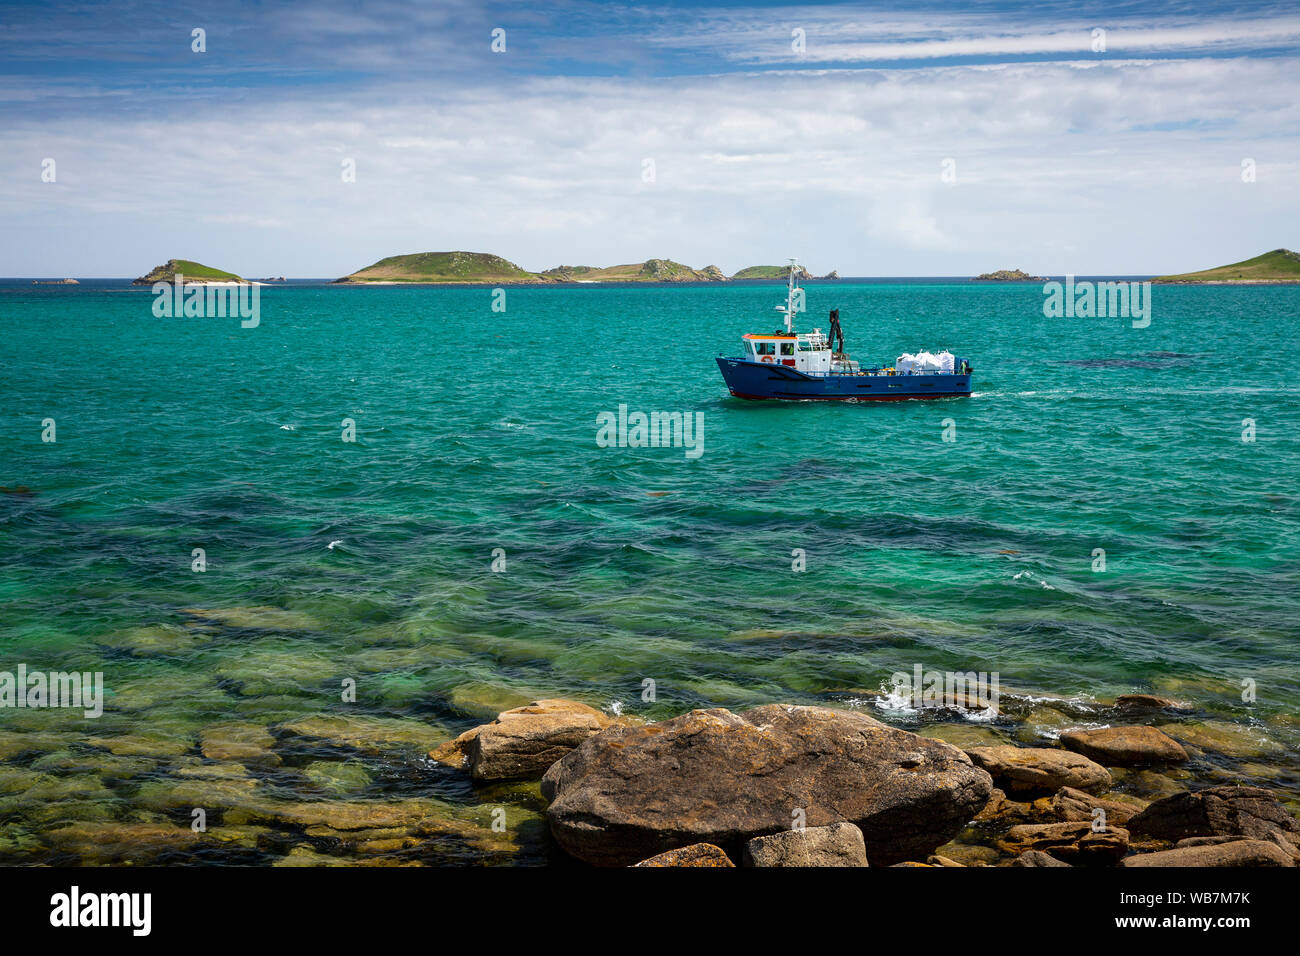 UK, England, Scilly Islands, St Martin’s, inter-island cargo boat Lyonesse Lady Stock Photo